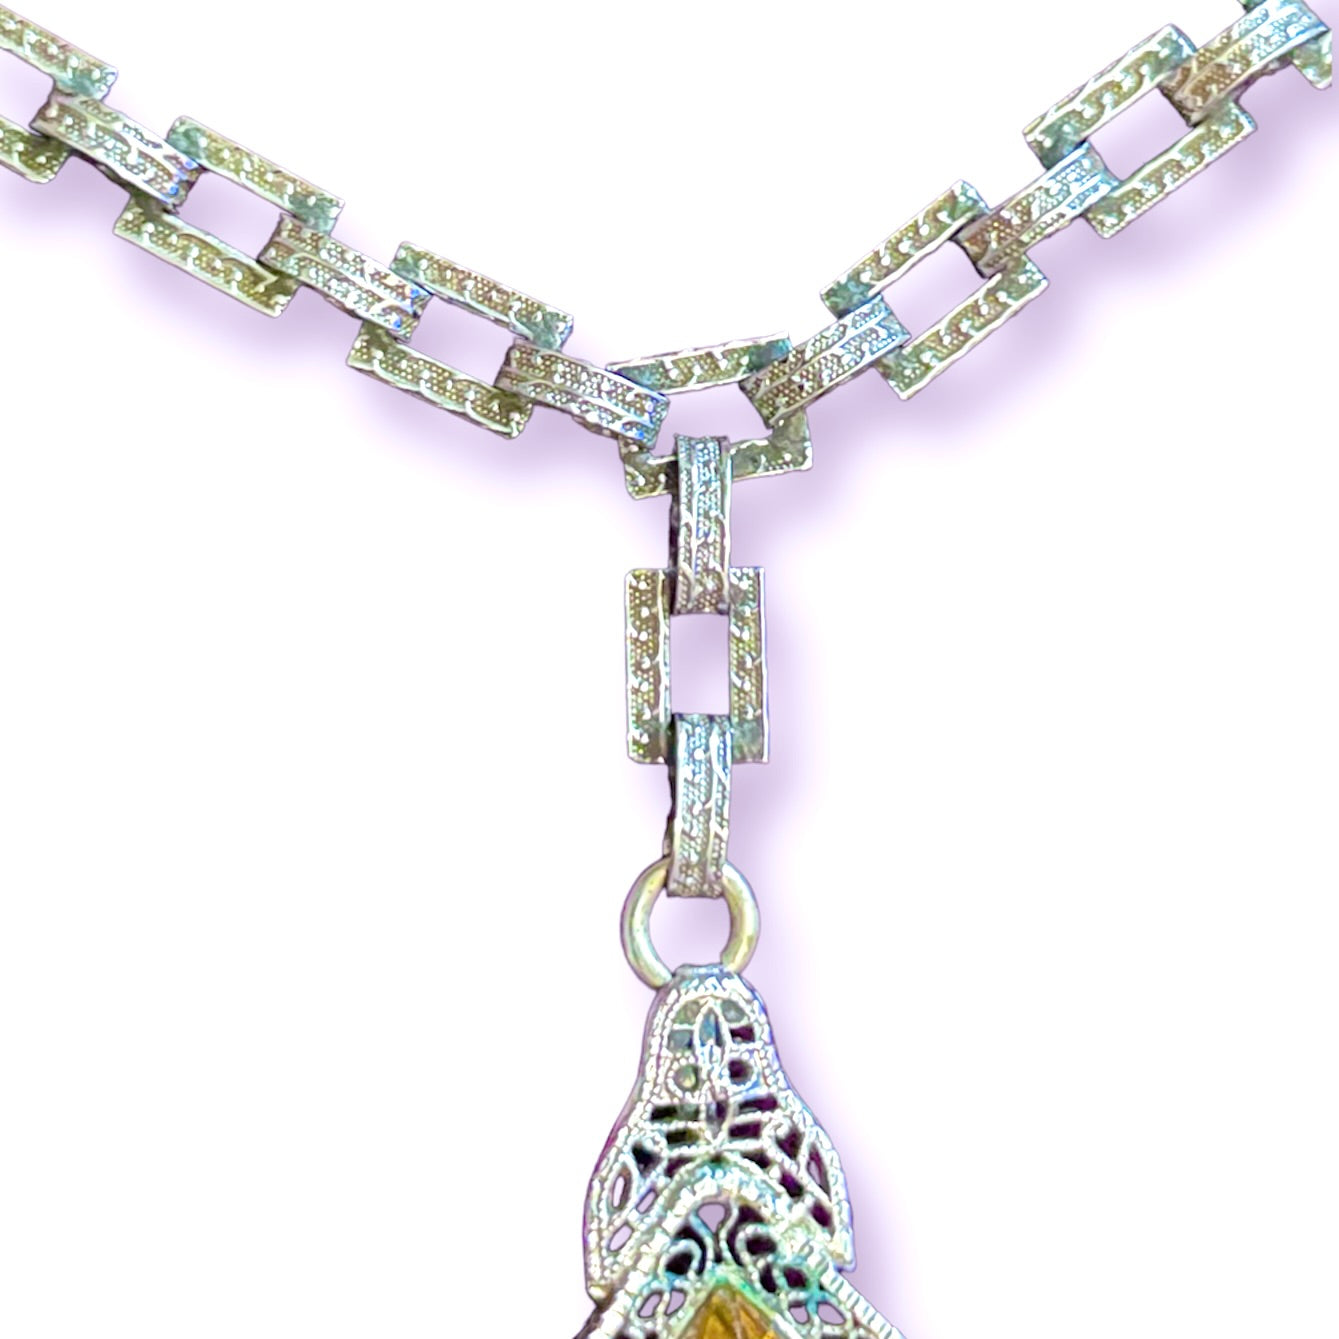 Citrine Czech Geometric Art Glass in Silver Filigree Necklace